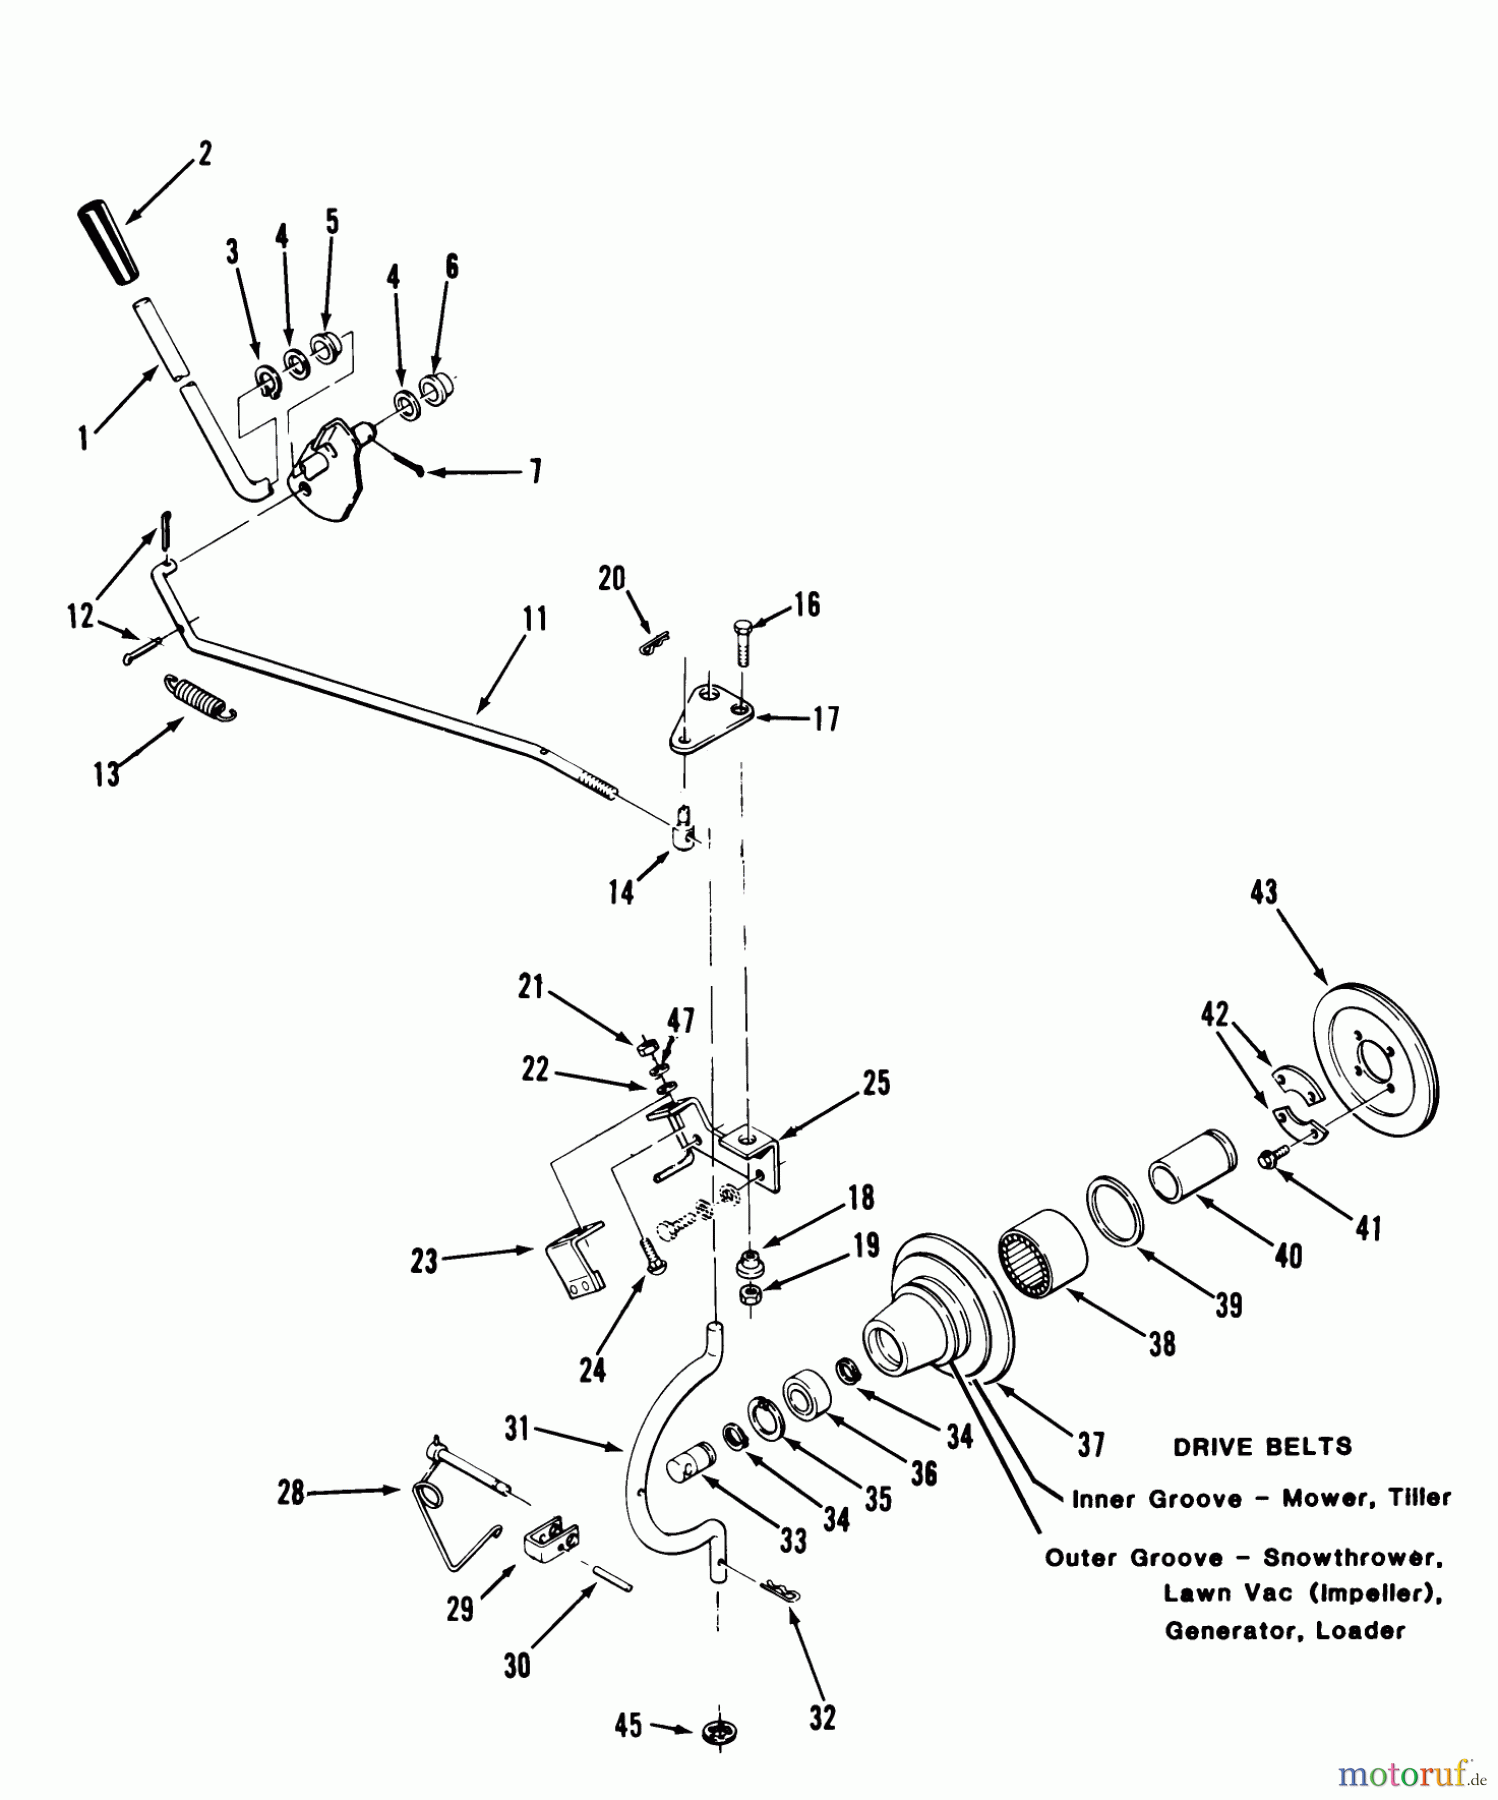  Toro Neu Mowers, Lawn & Garden Tractor Seite 1 31-20OE01 (520-H) - Toro 520-H Garden Tractor, 1988 PTO CLUTCH AND CONTROL